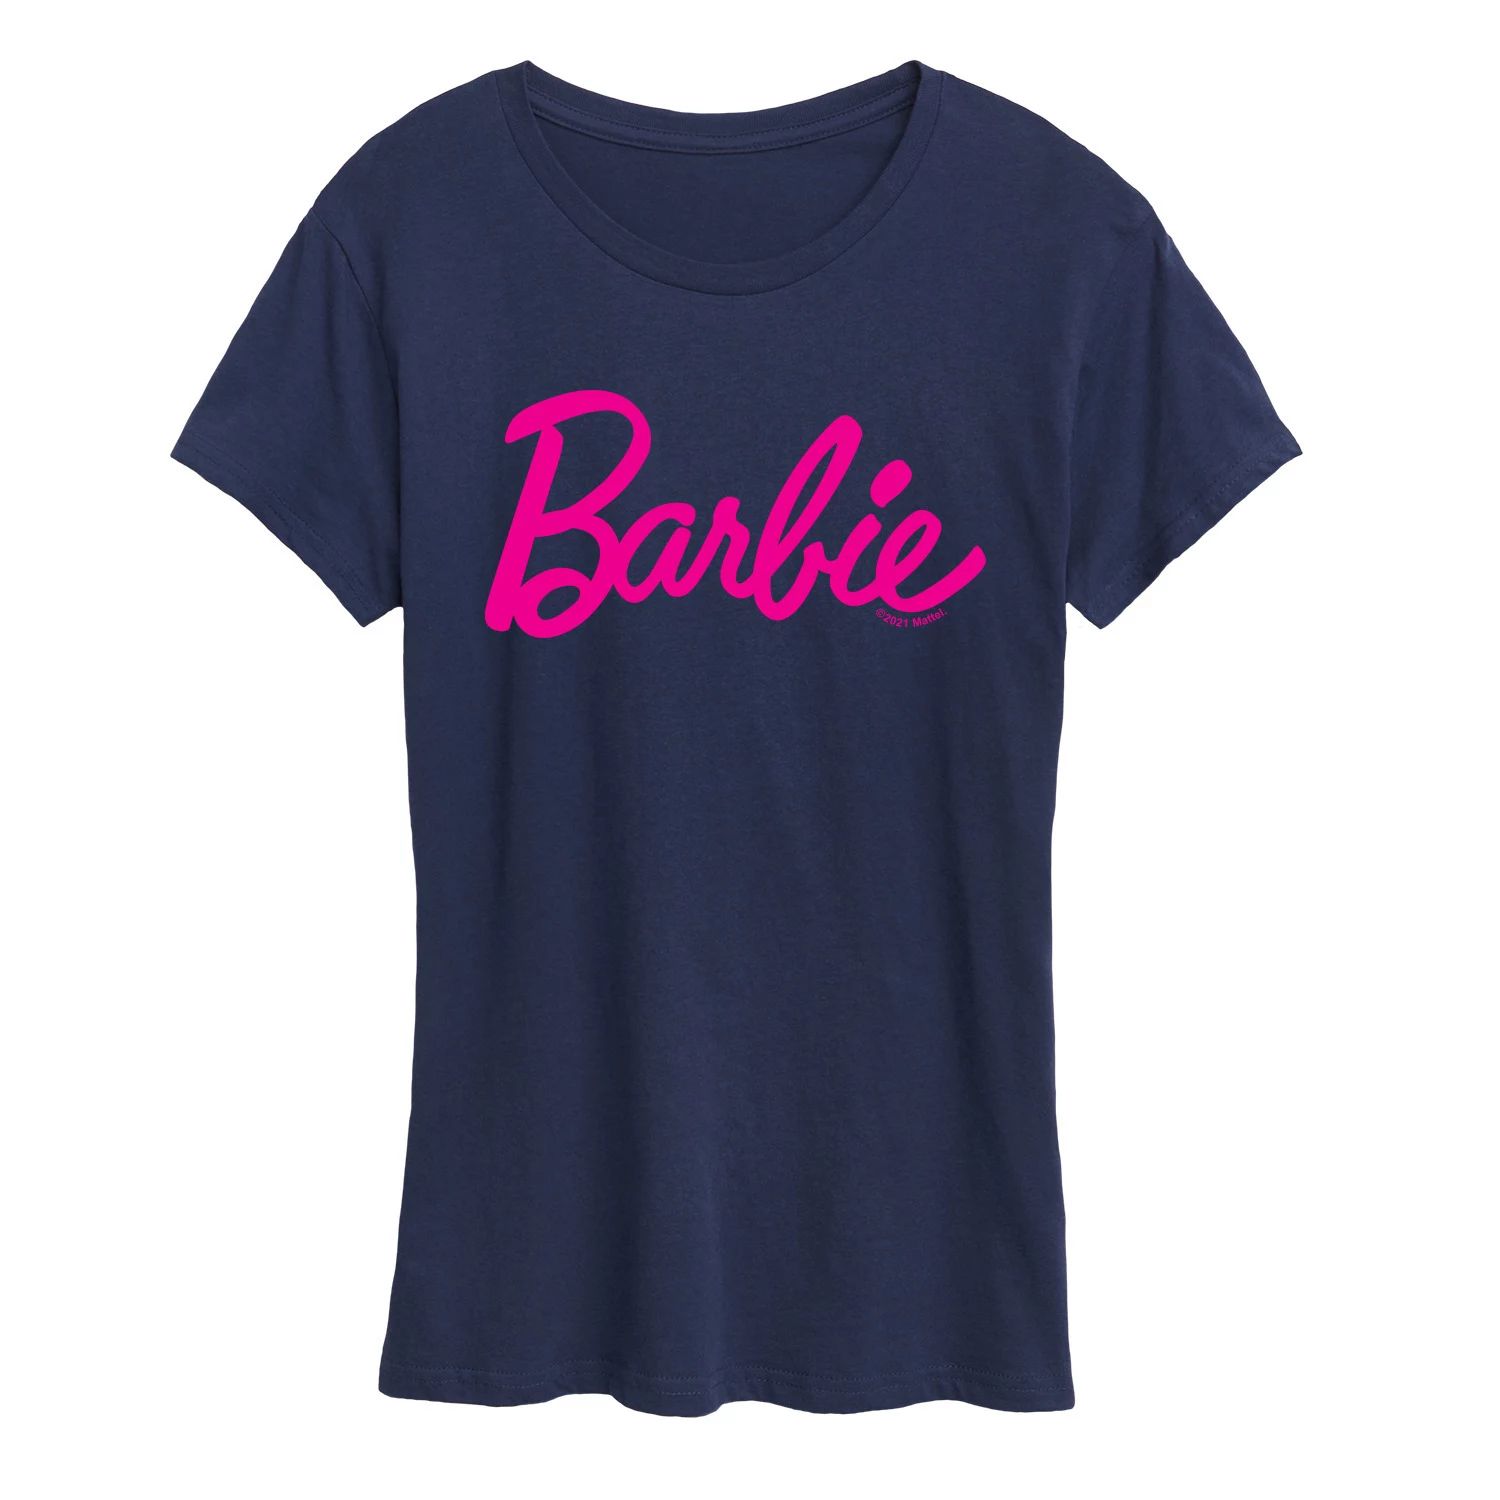 Классическая футболка с логотипом Barbie для юниоров Licensed Character, темно-синий классическая футболка с логотипом barbie для юниоров licensed character